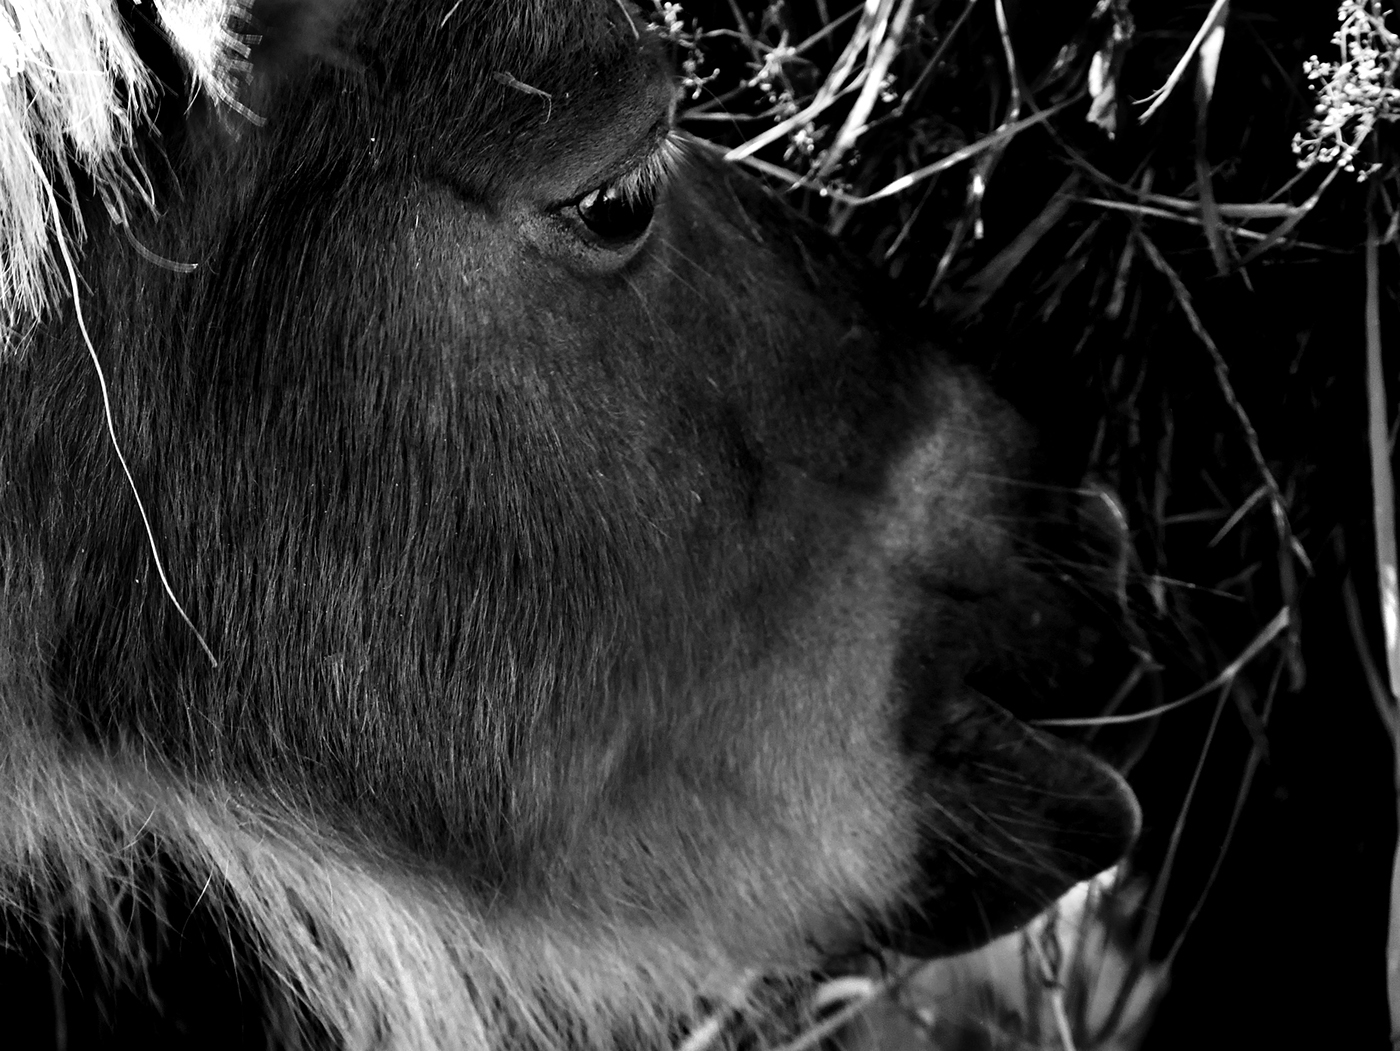 animal bird Prisoner cage sad elephant meerkat goat zoo prison